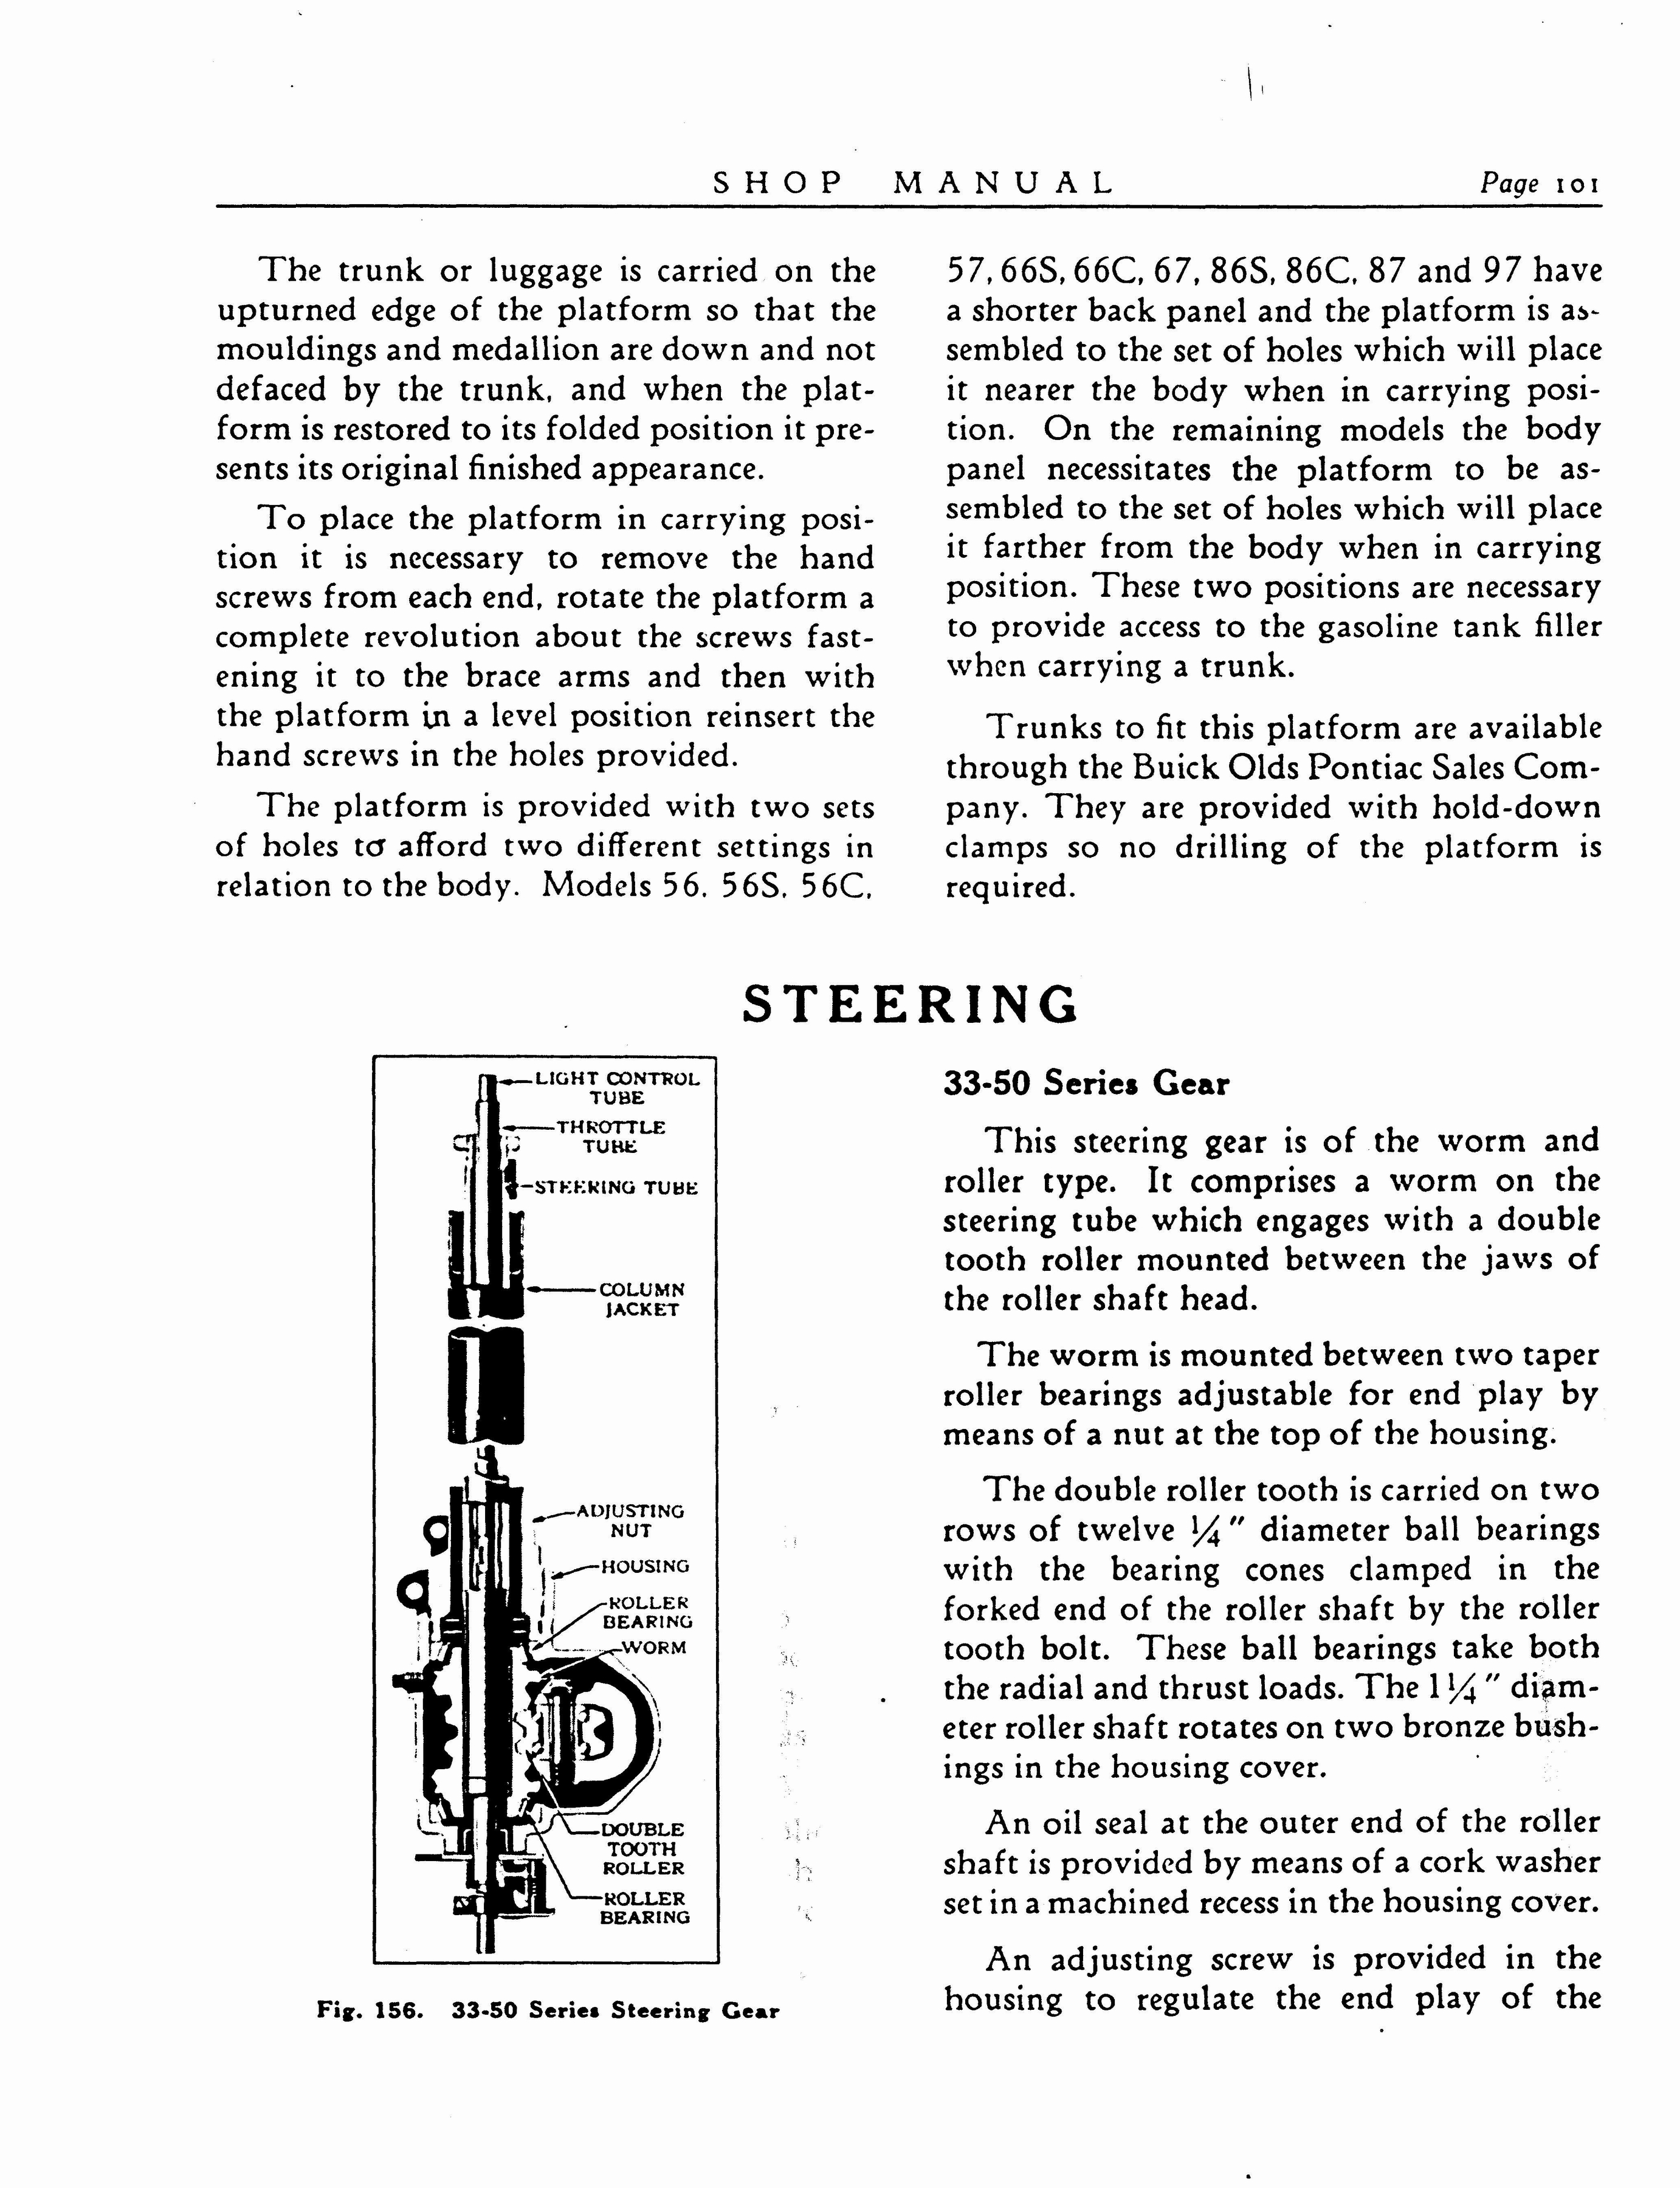 n_1933 Buick Shop Manual_Page_102.jpg